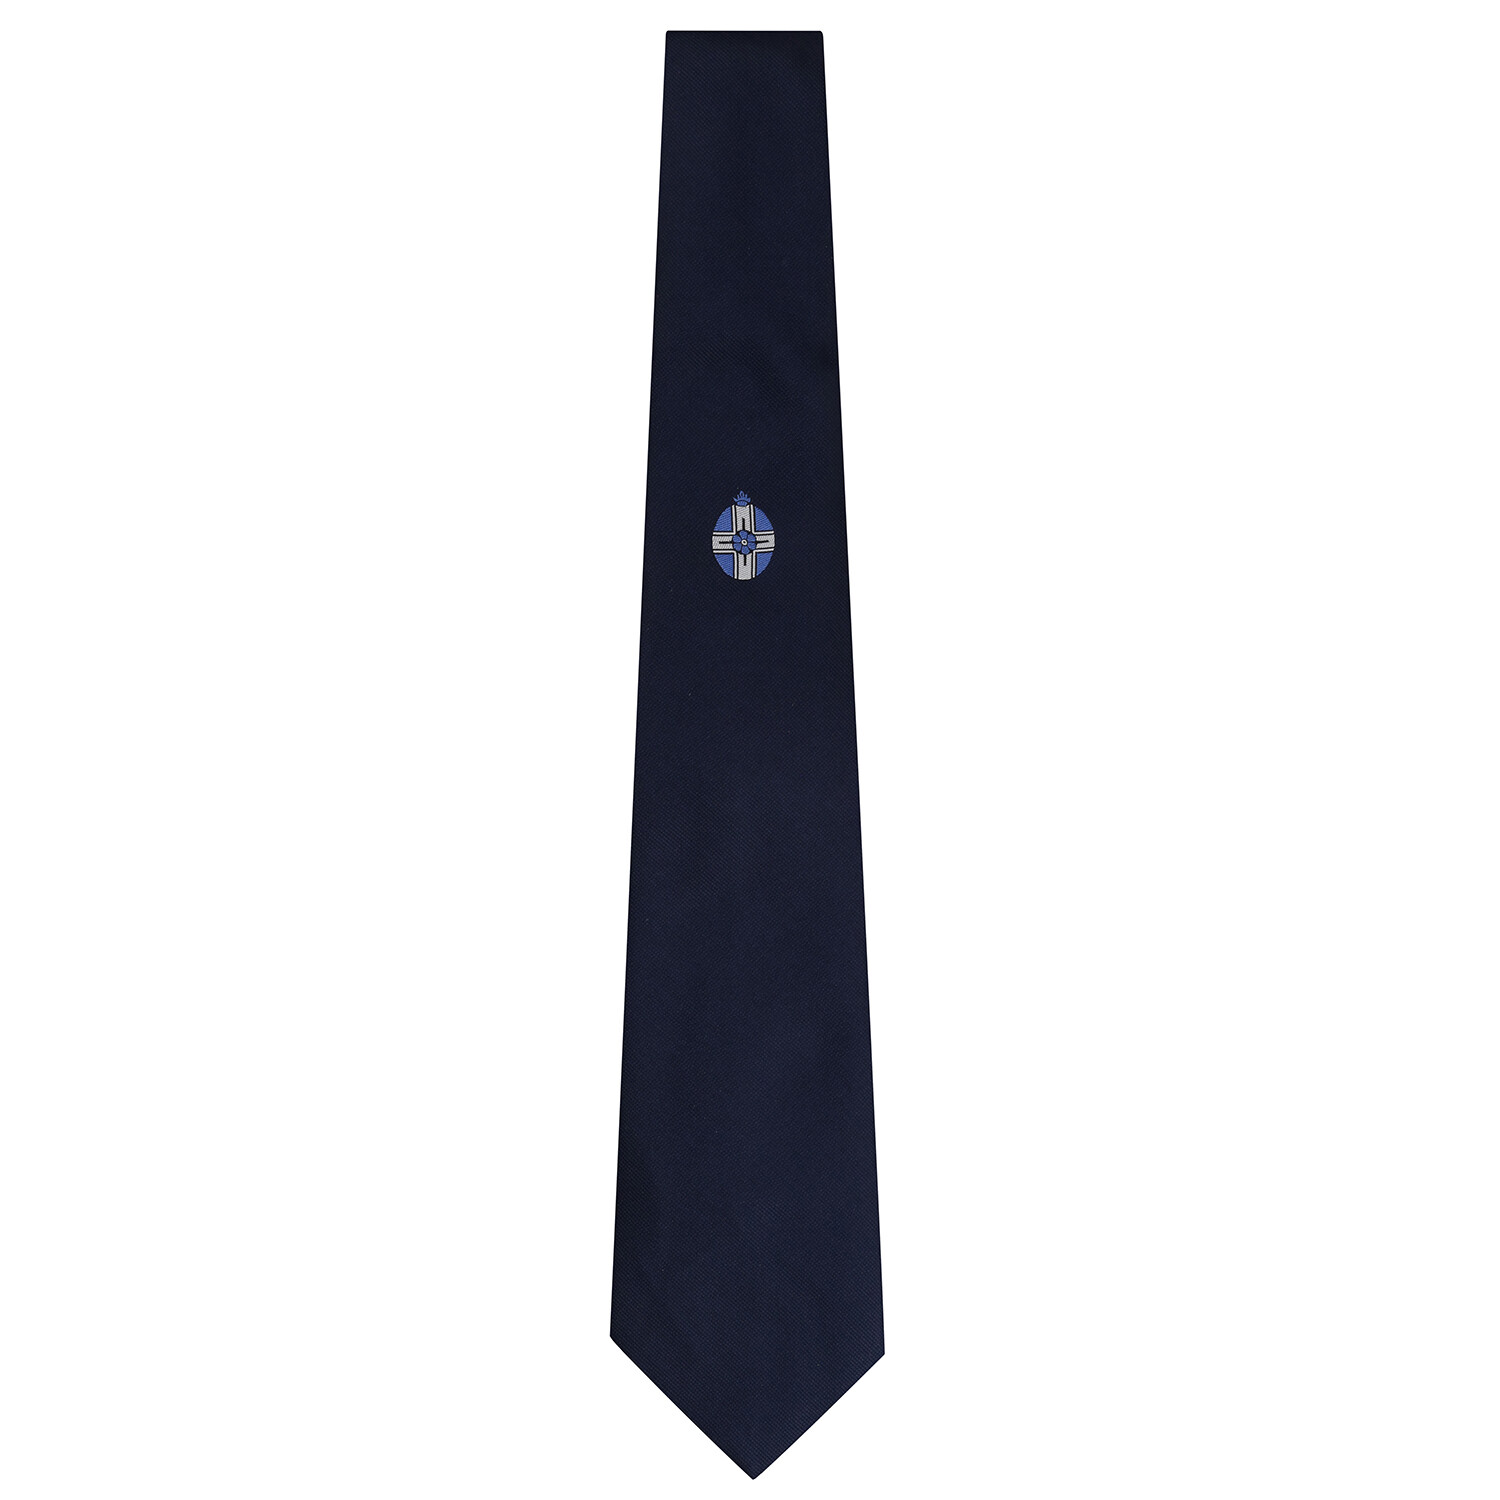 Notre Dame High Tie (S1-S5)